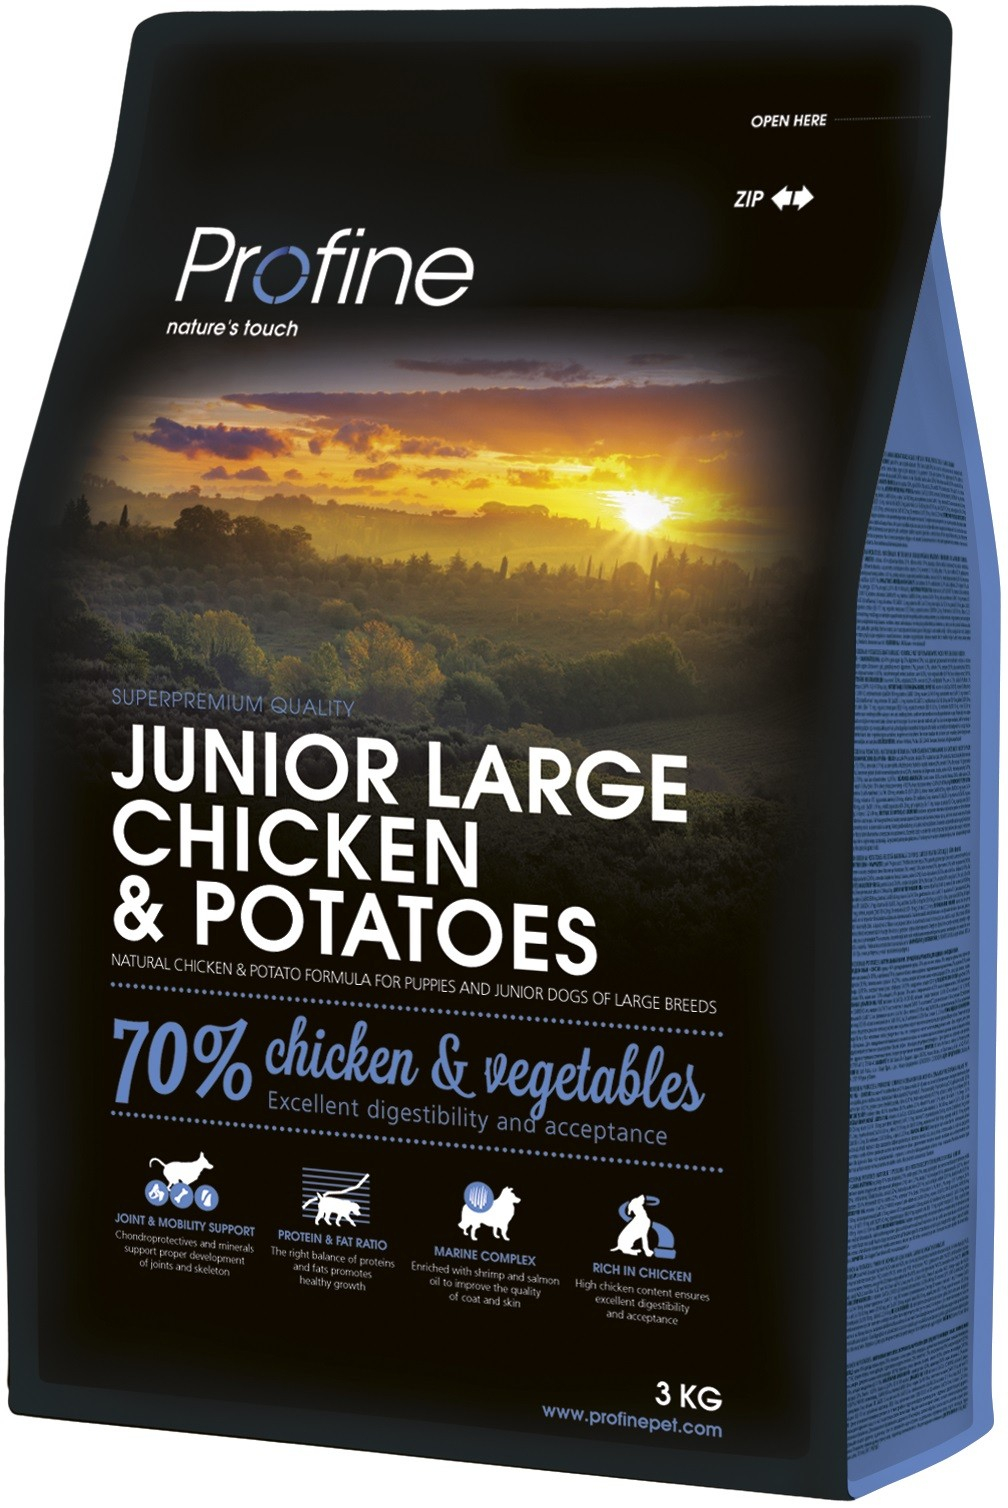 Profine Junior Large Breed Chicken & Potatoes